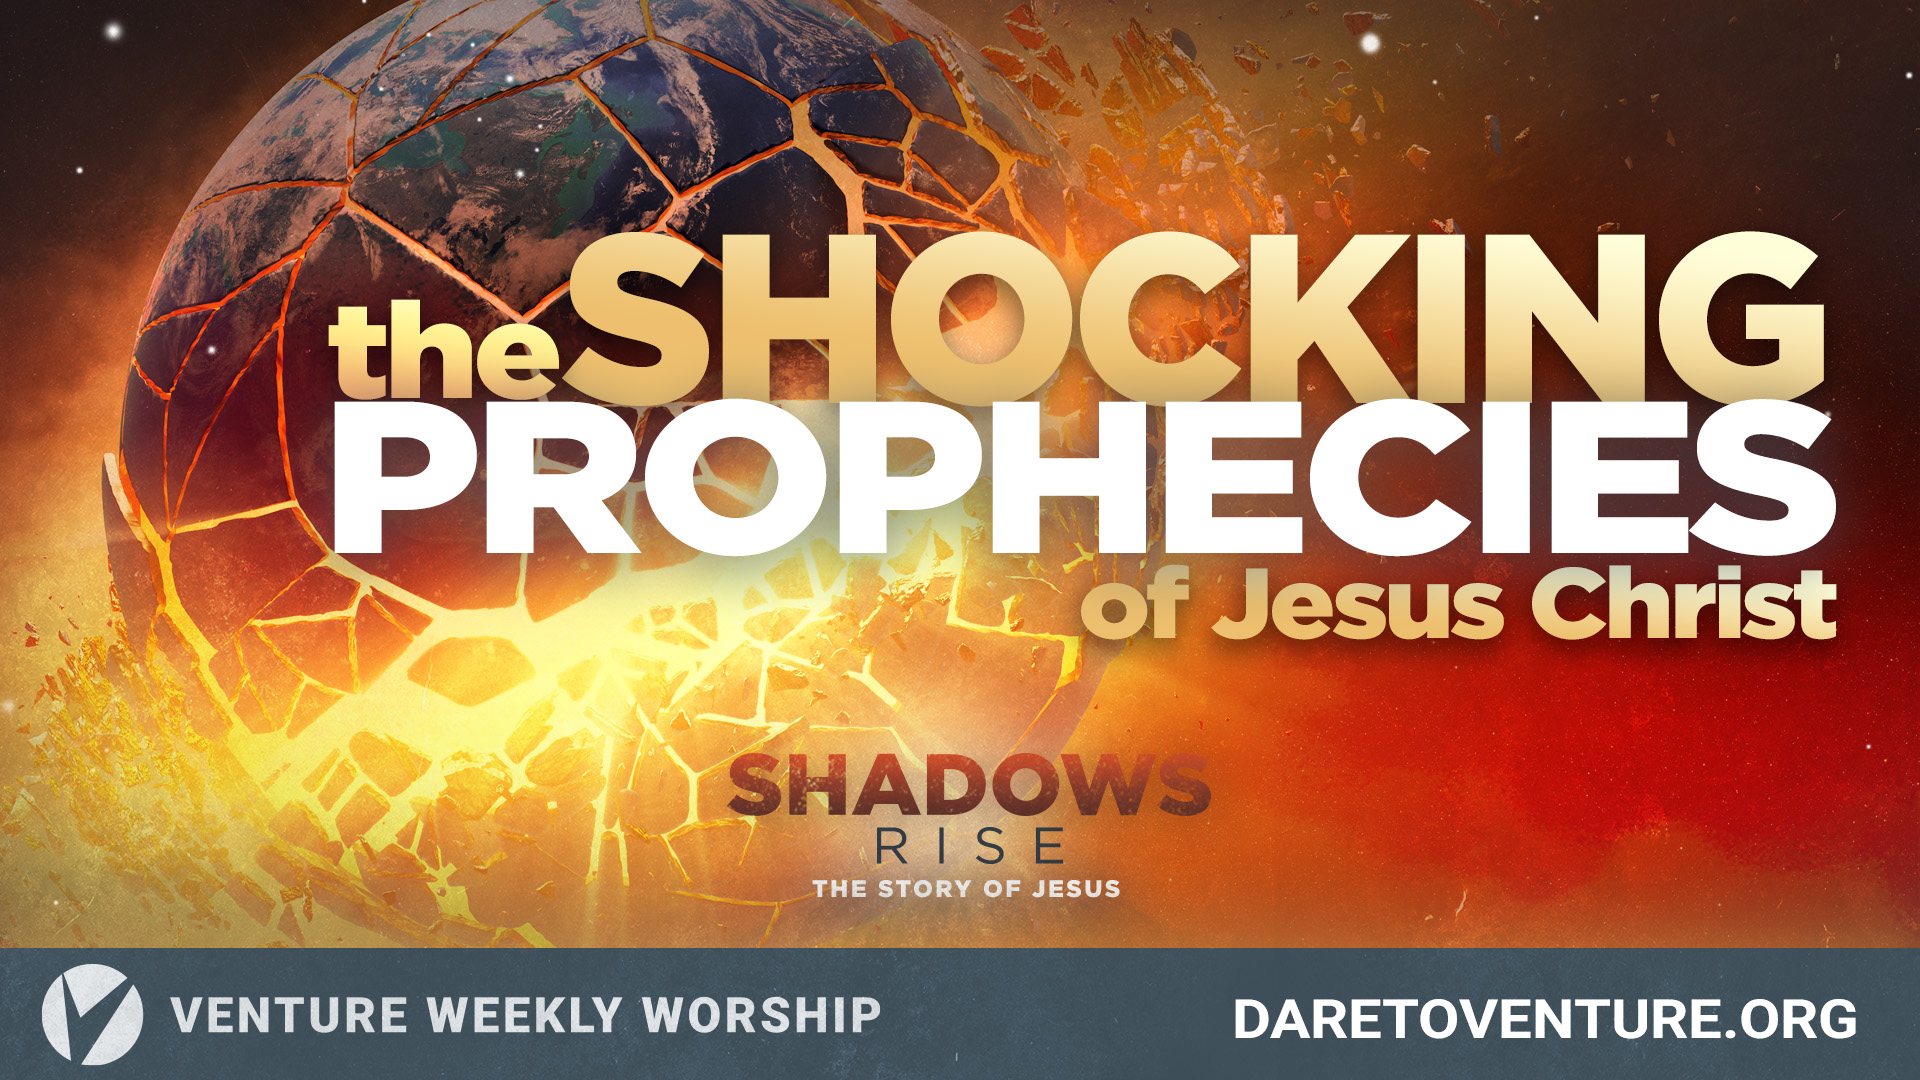 Shadows Rise: The Shocking Prophecies of Jesus Christ